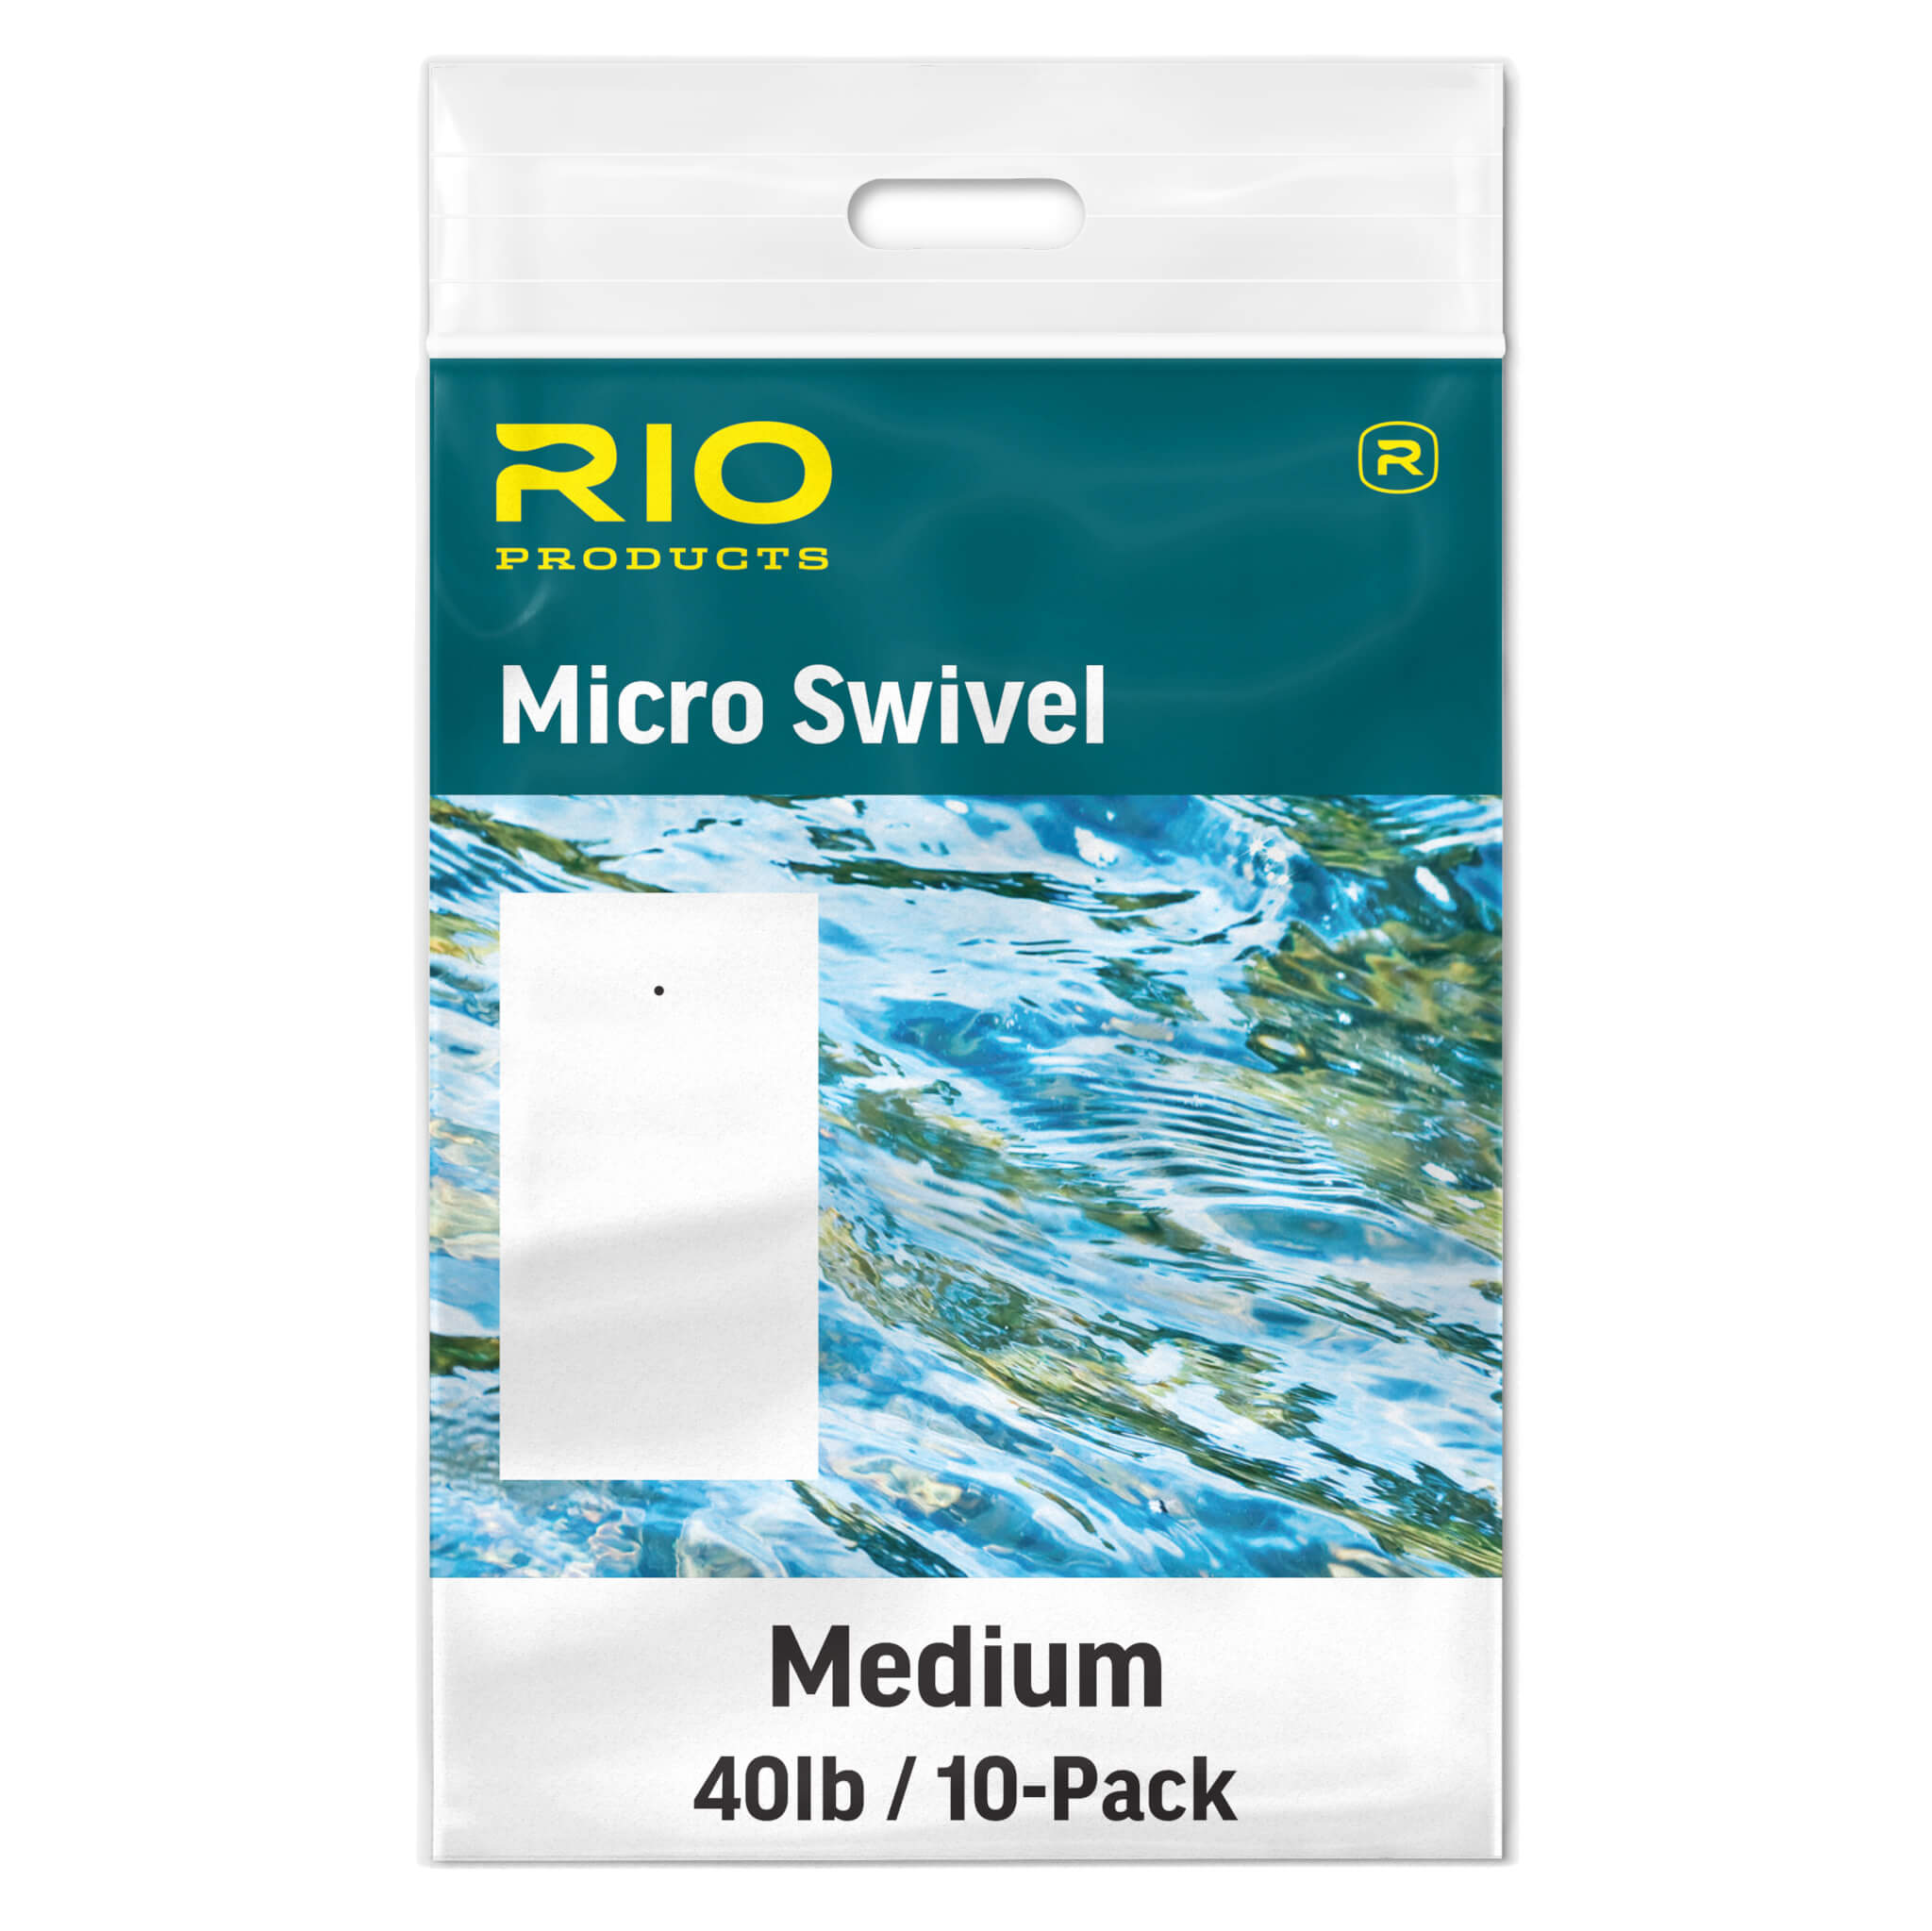 RIO Micro Swivels – Guide Flyfishing, Fly Fishing Rods, Reels, Sage, Redington, RIO